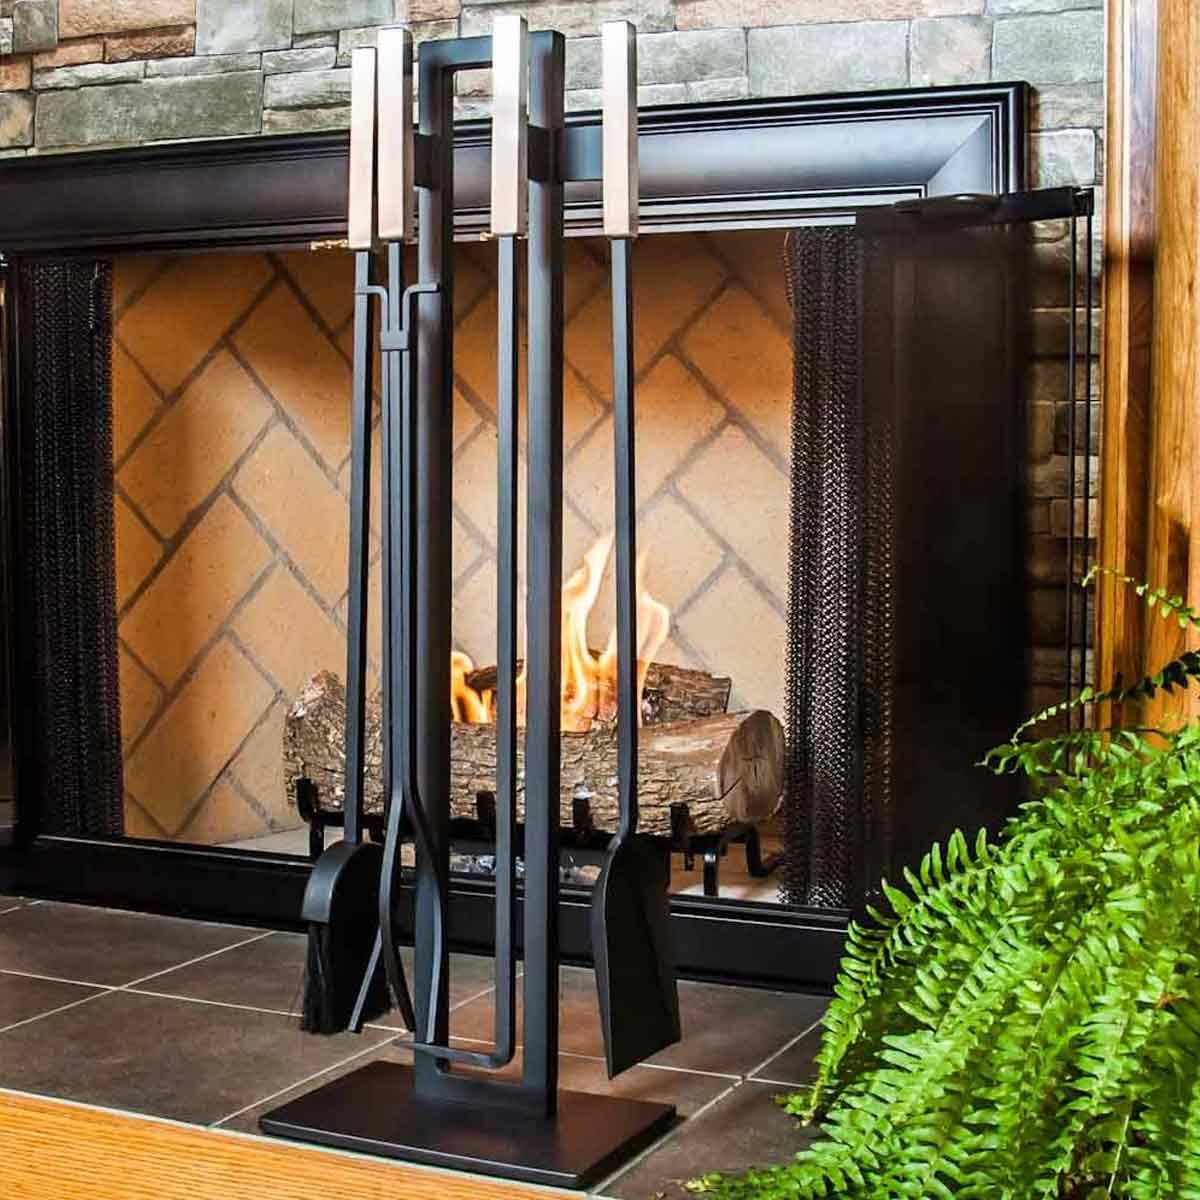 Fireplace andirons and Grates Inspirational Wood Stove tools tool Sets Fireplace tool Set